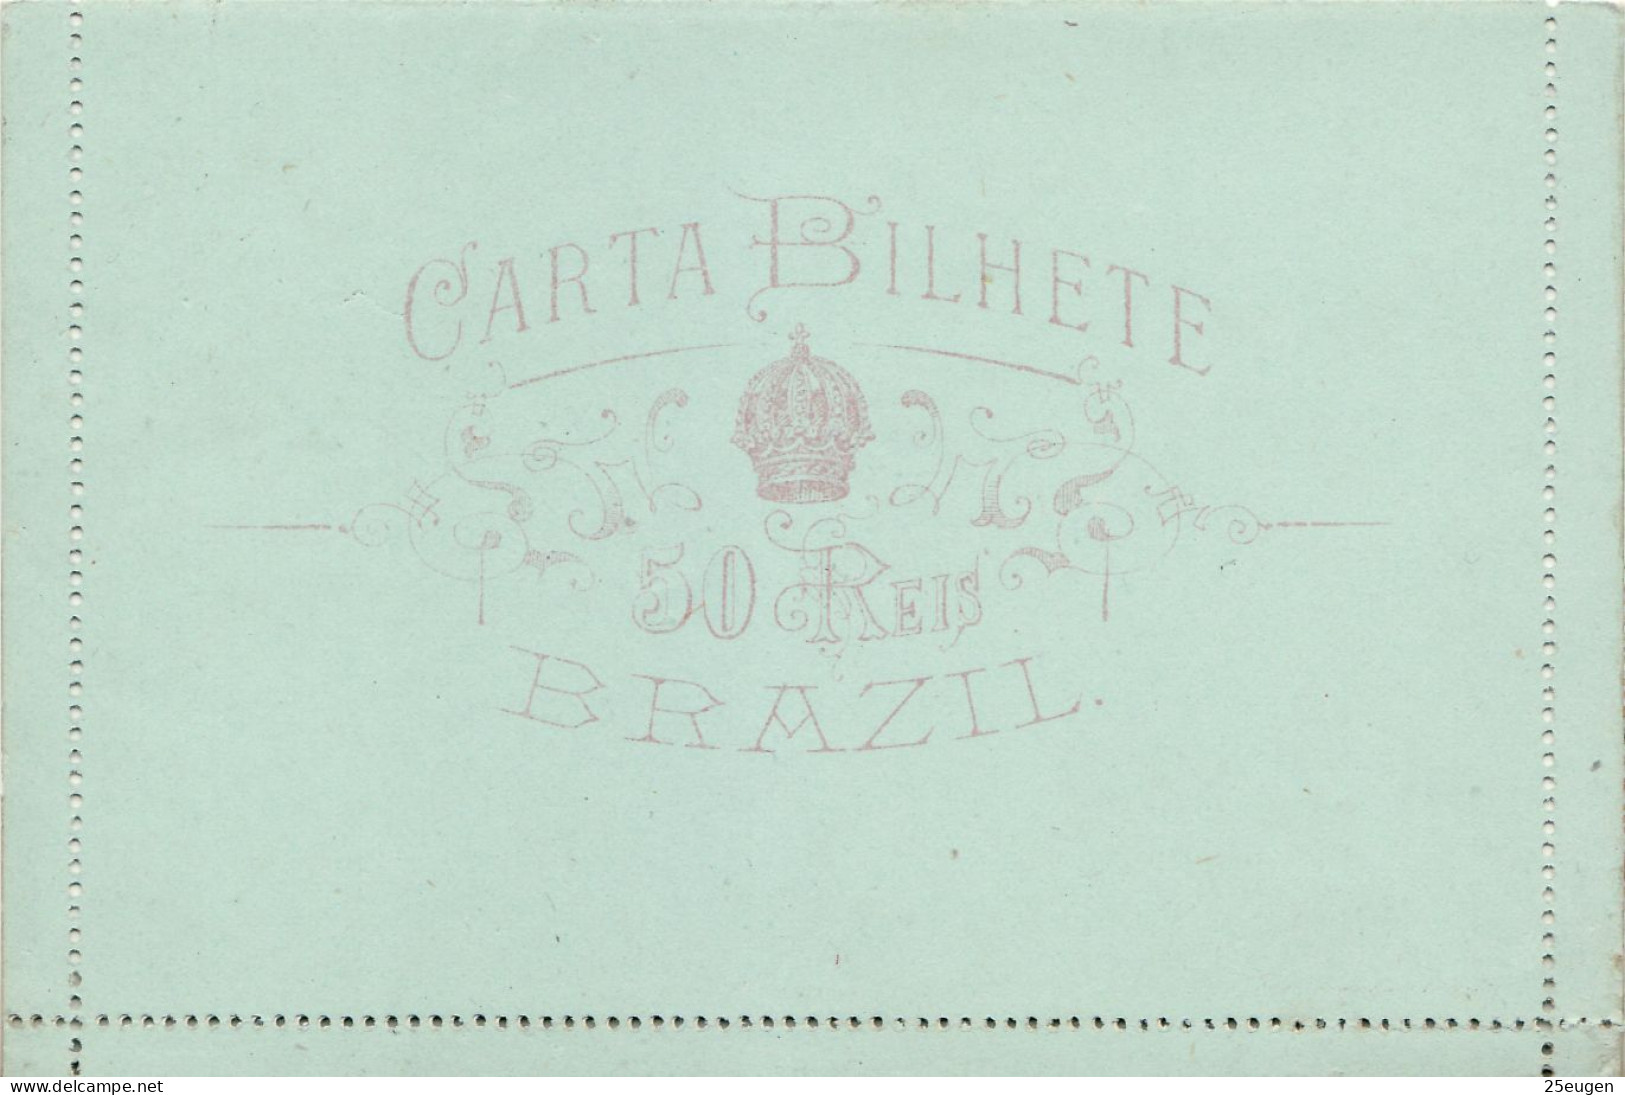 BRAZIL 1884 COVER LETTER UNUSED - Storia Postale